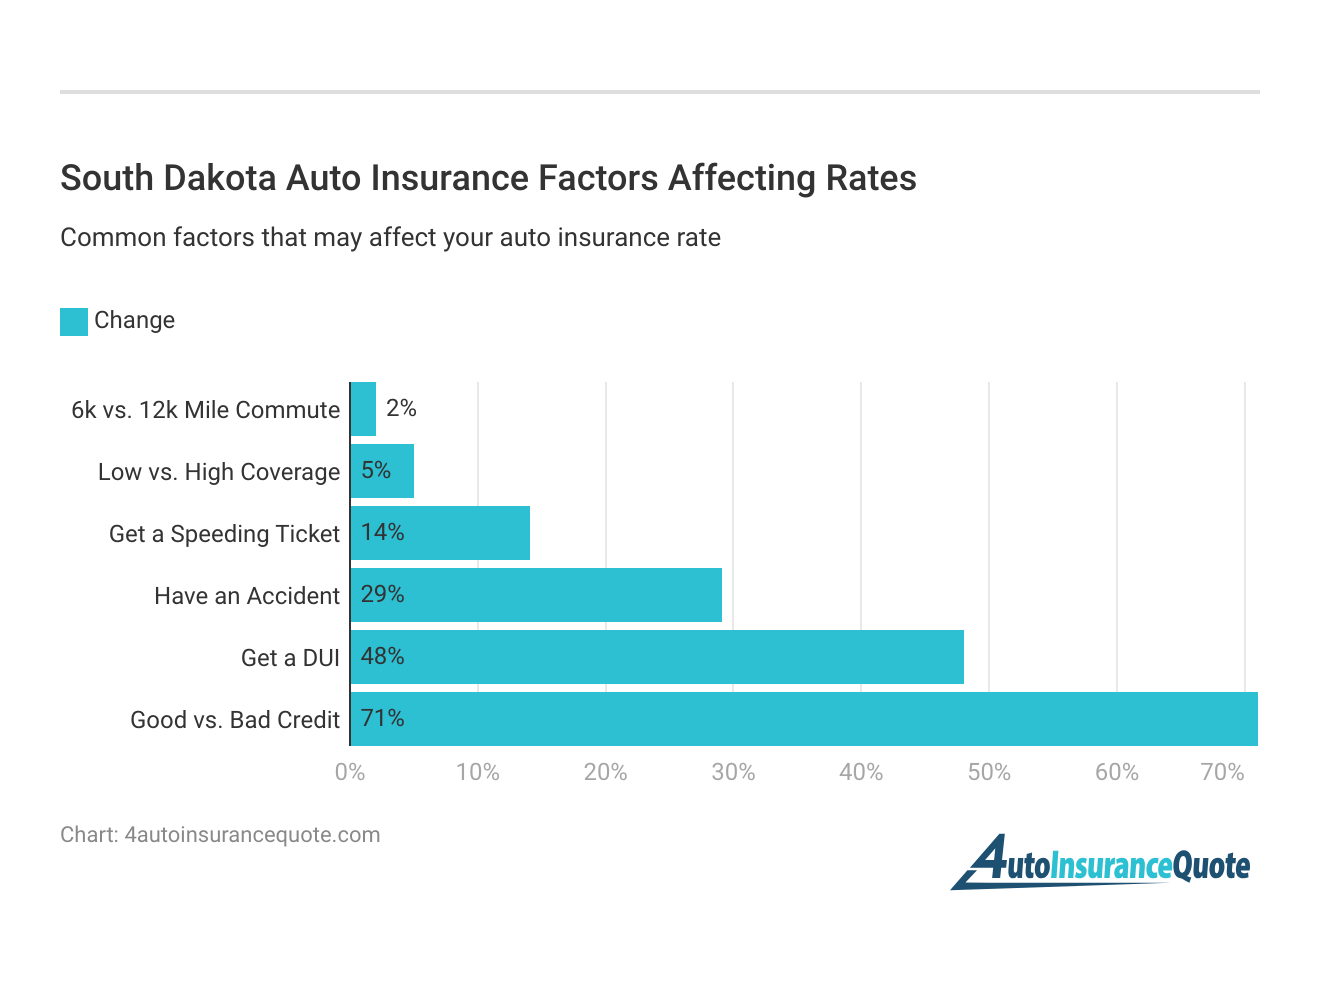 <h3>South Dakota Auto Insurance Factors Affecting Rates</h3>